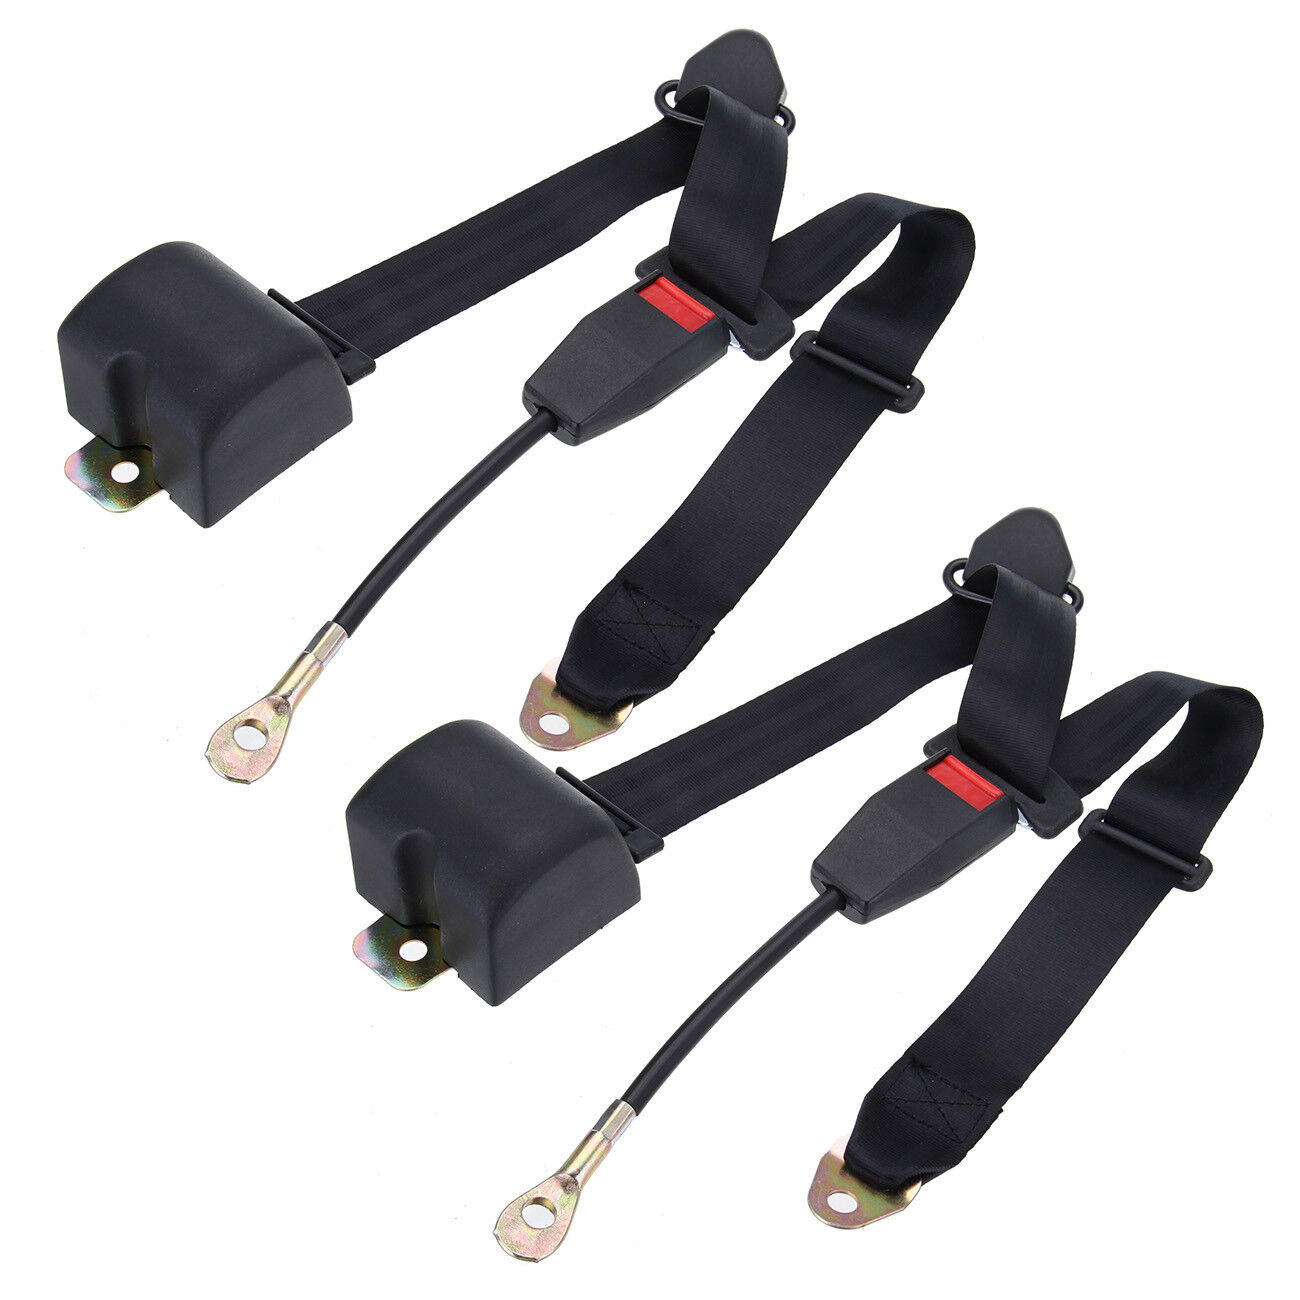 2 Pack Black Universal 3 Point Retractable Adjustable Car Seat Belt